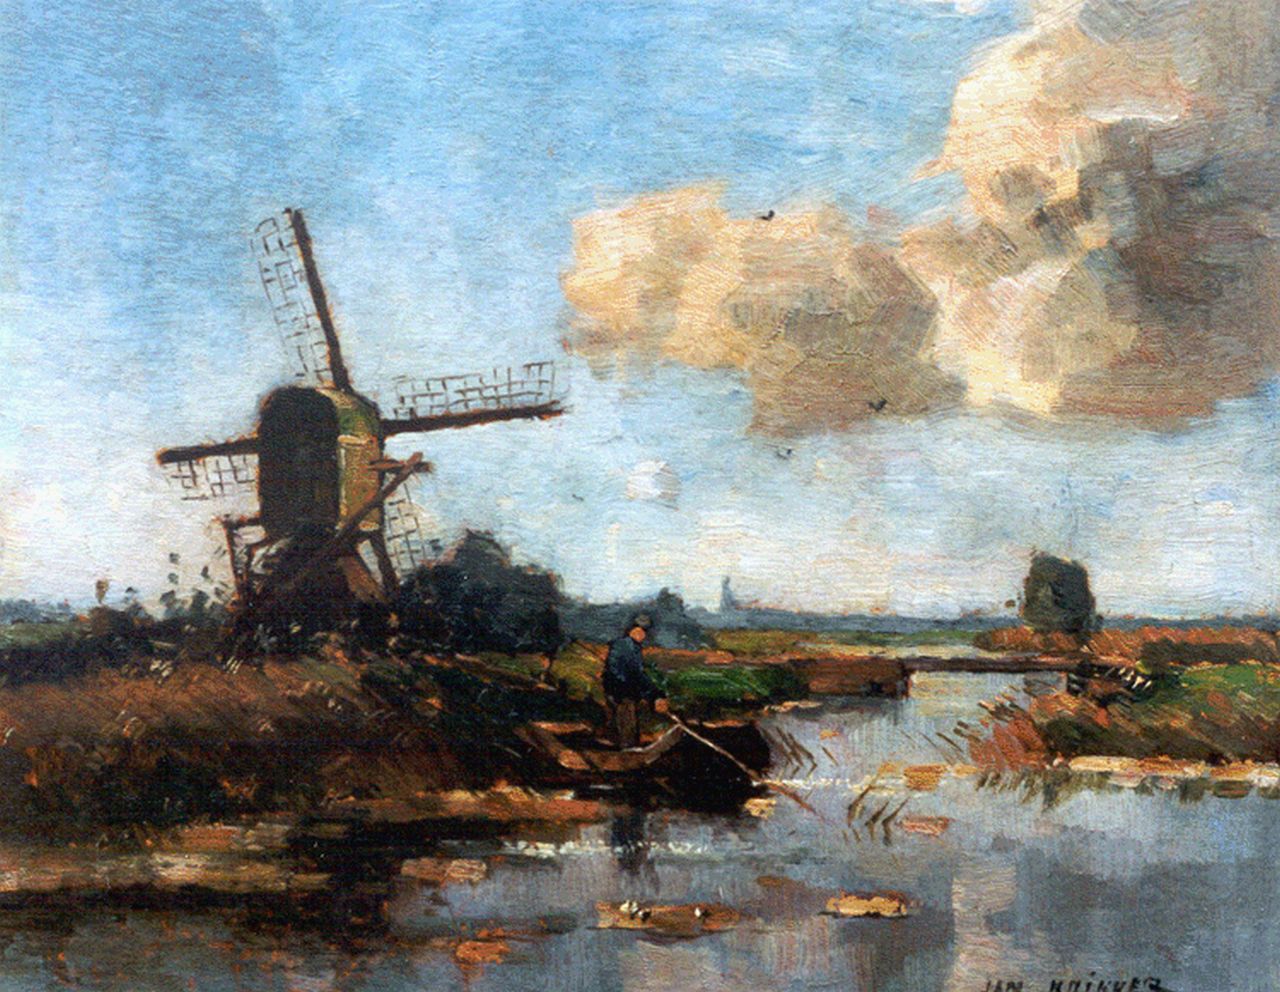 Knikker sr. J.S.  | 'Jan' Simon Knikker sr., A fisherman in a polder landscape, oil on painter's board 25.3 x 28.1 cm, signed l.r.